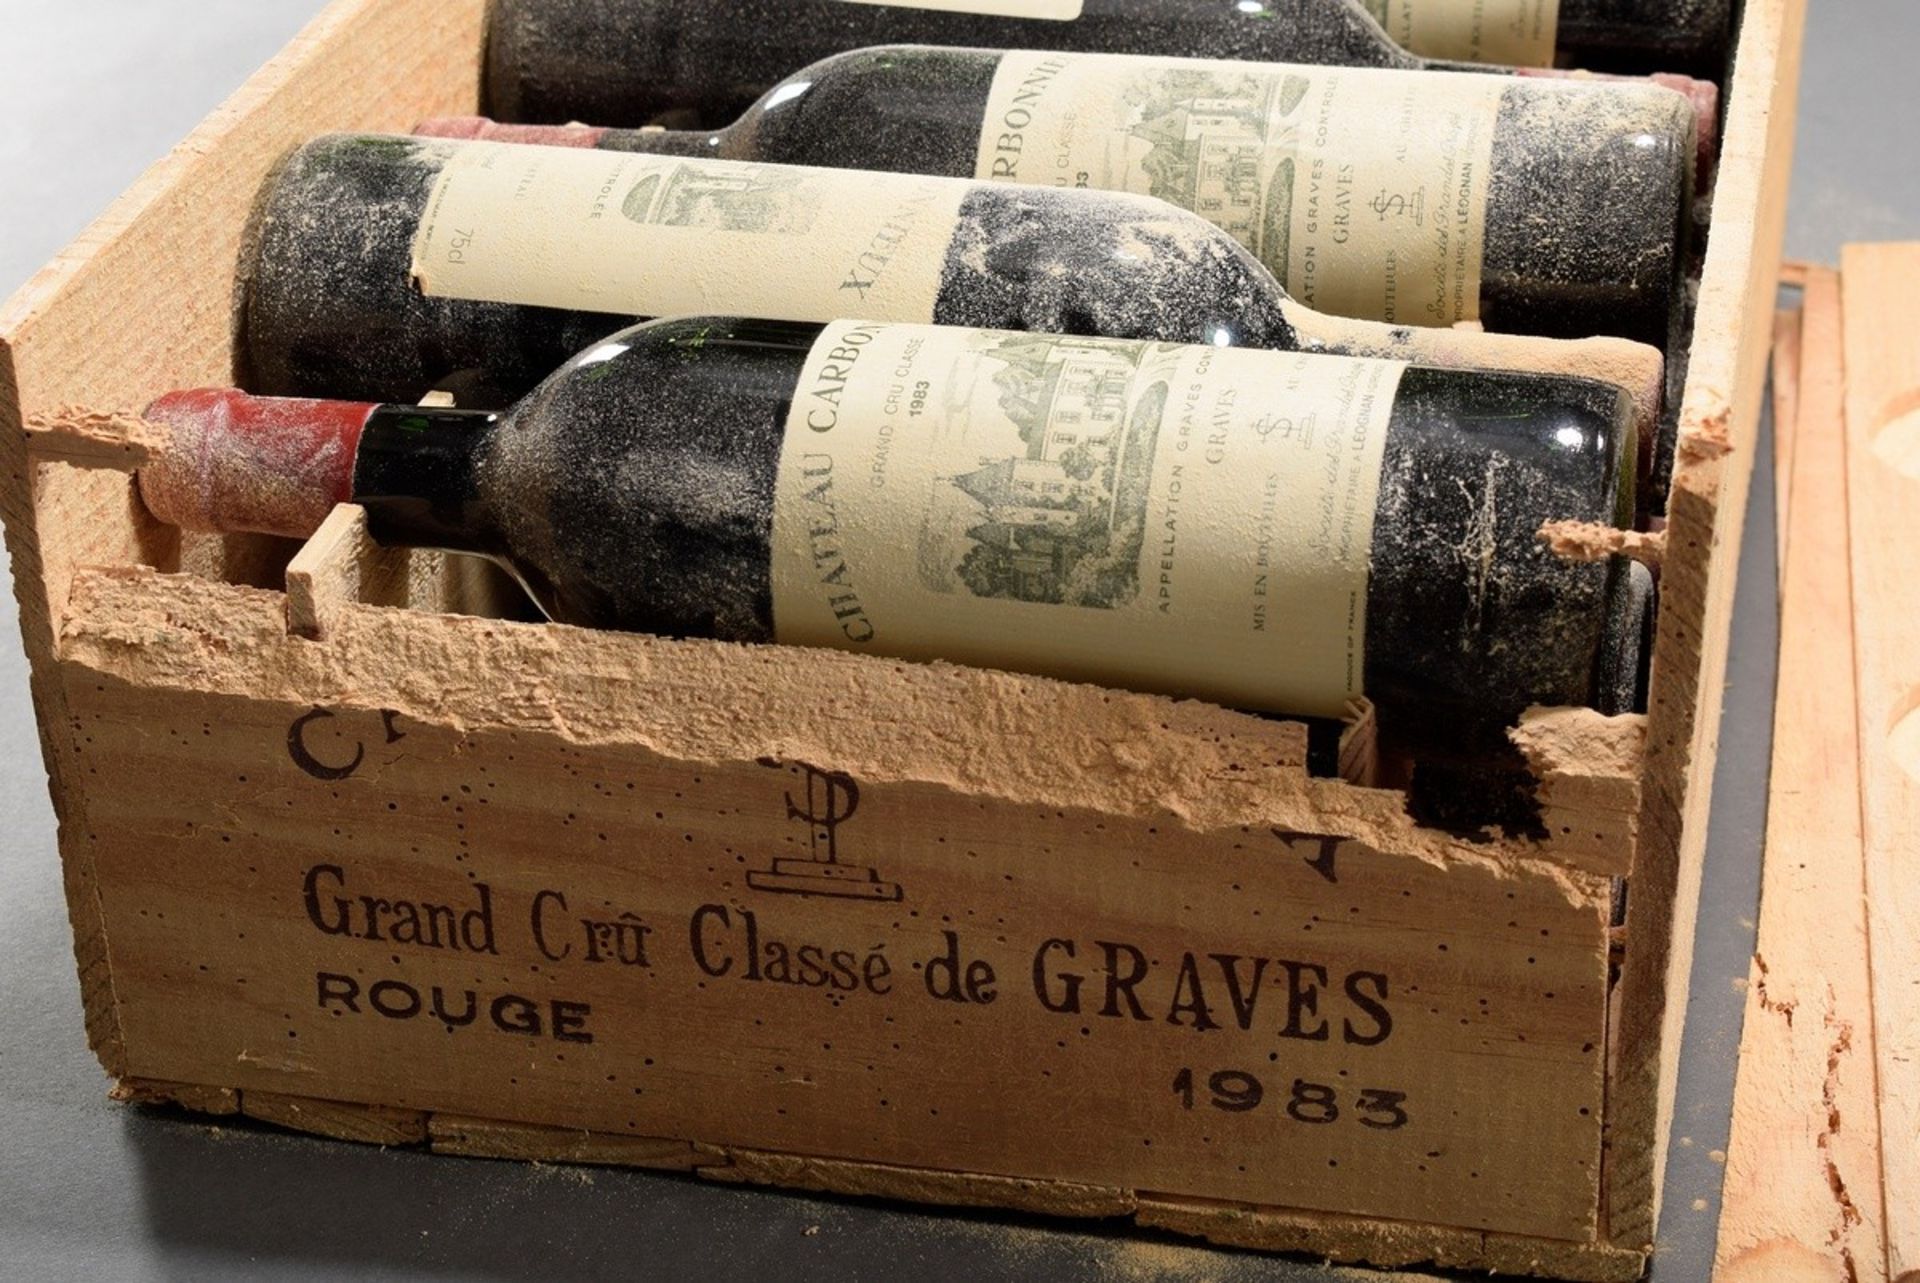 12 bottles 1983 Bordeaux red wine "Chateau Carbonnieux", Gand Cru Classée Graves, upper shoulder, 0 - Image 6 of 7